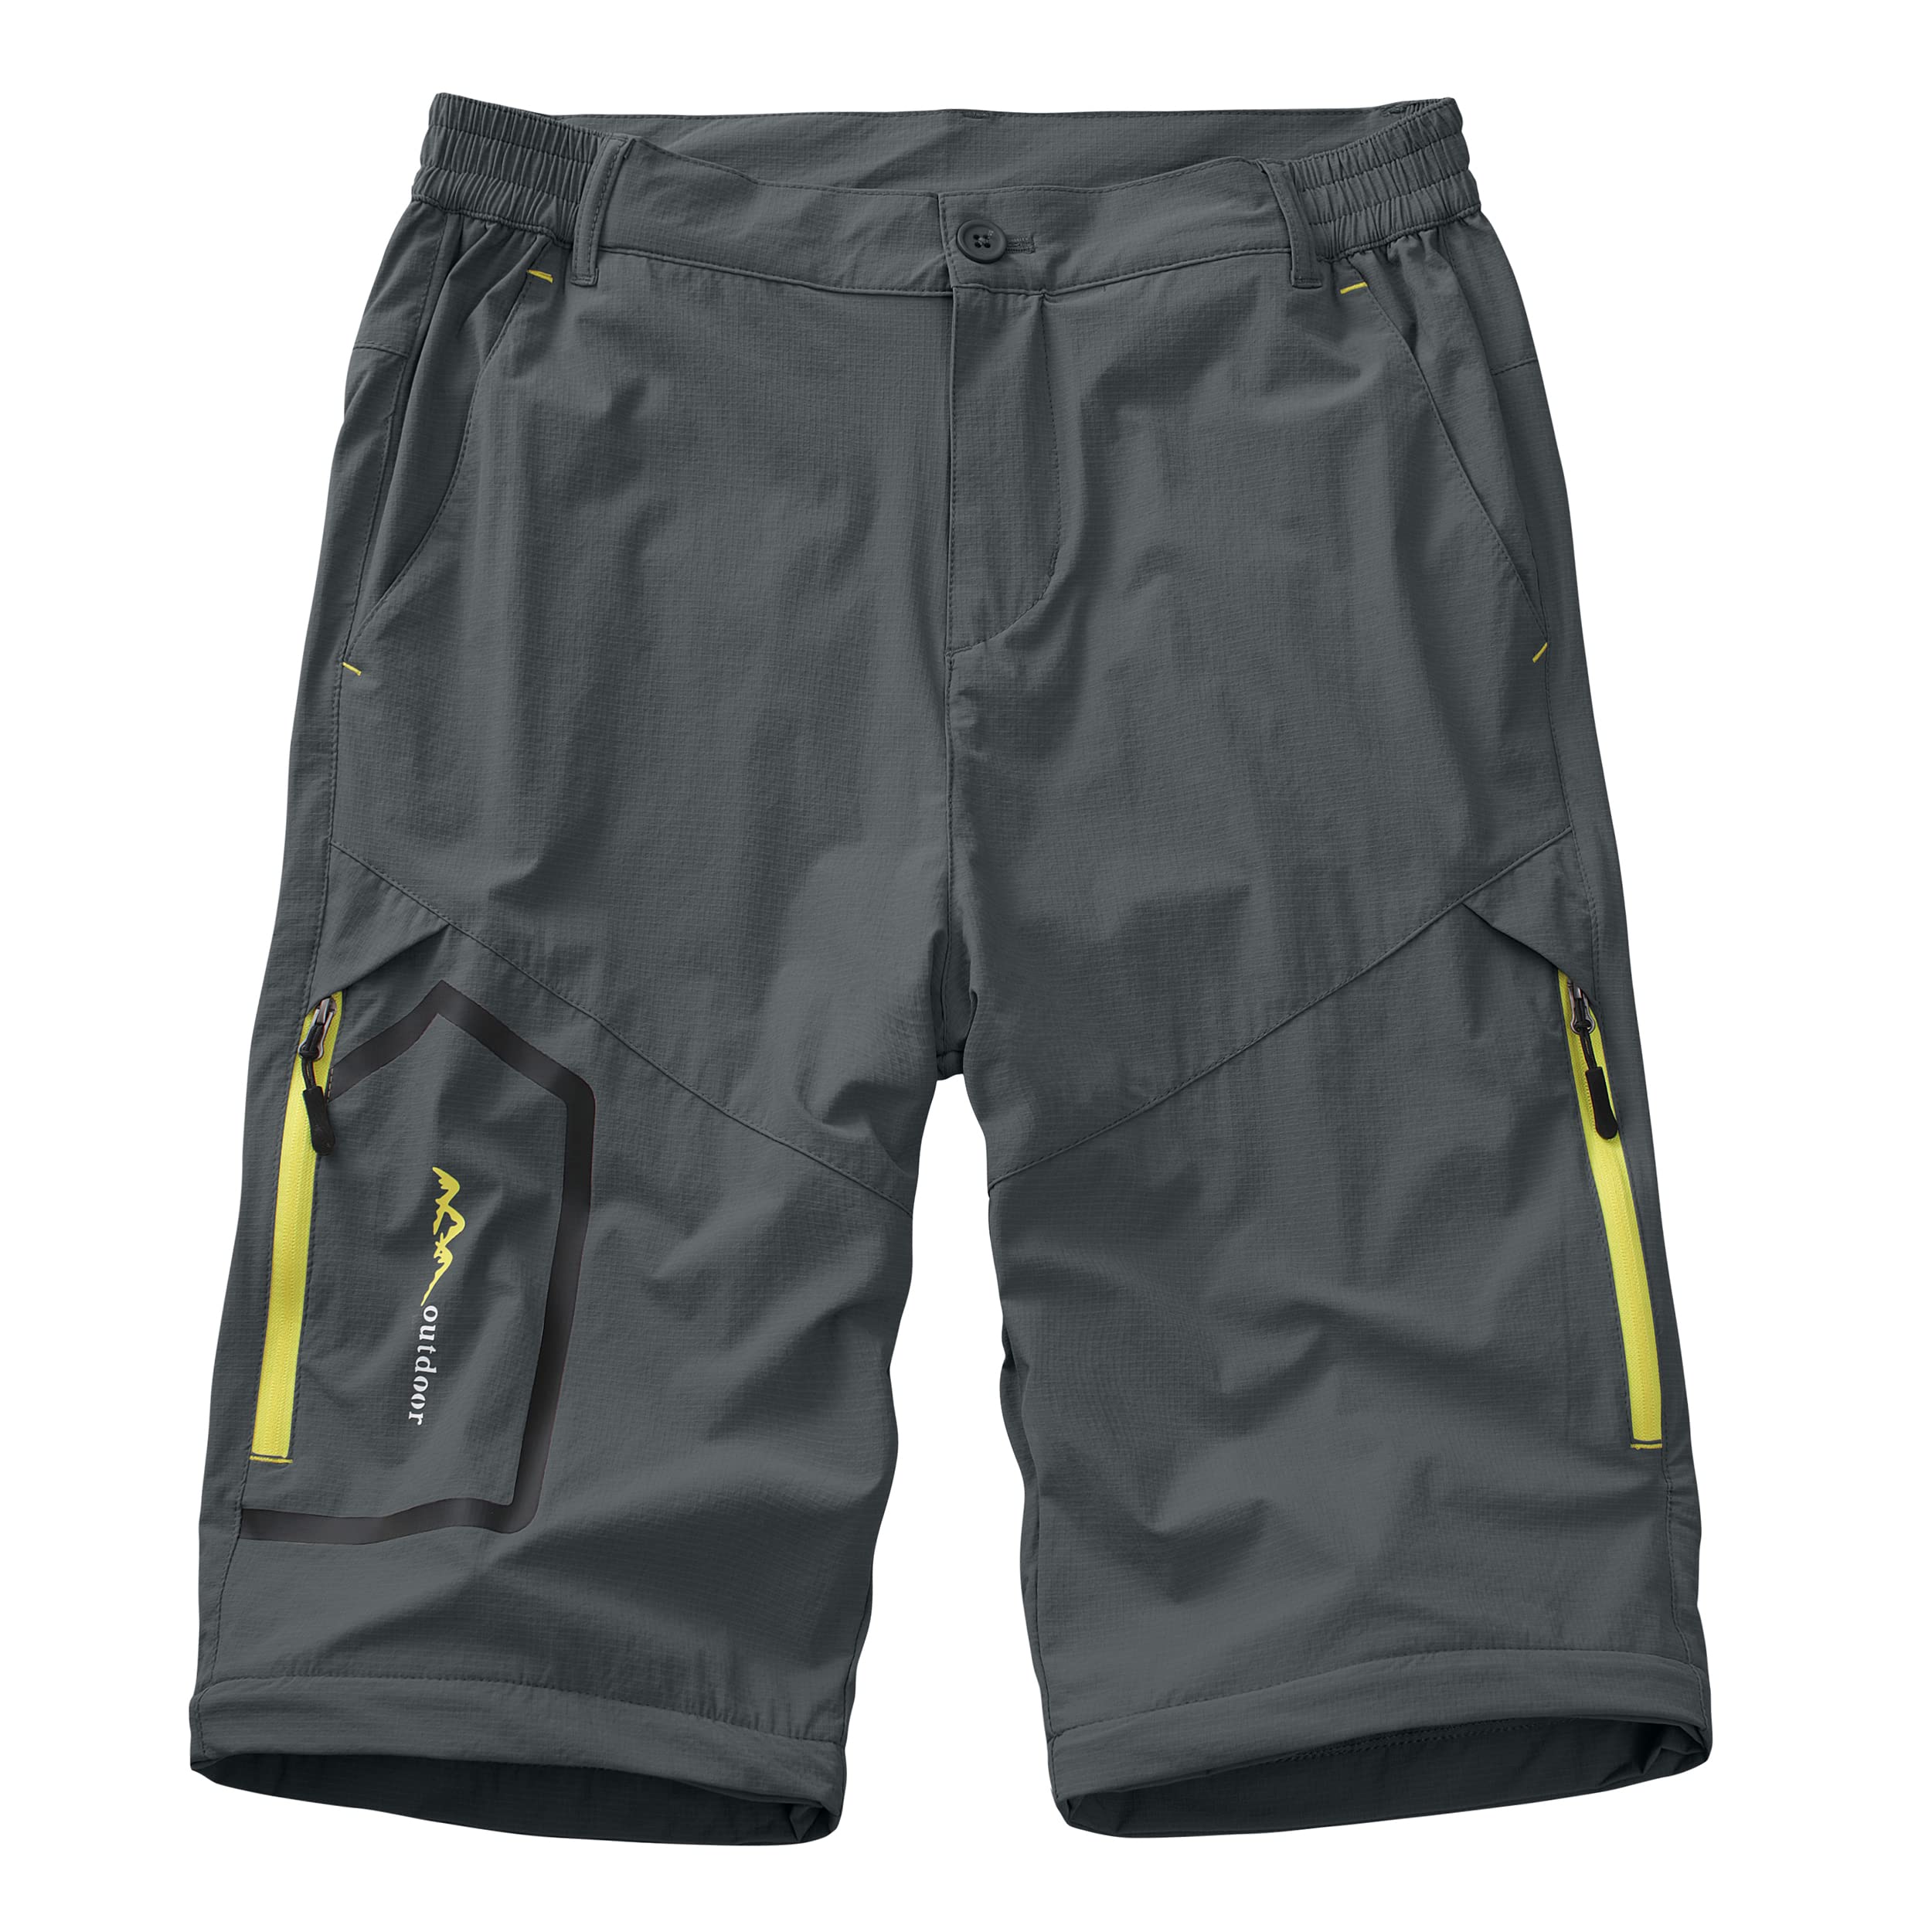 Mens Hiking Stretch Pants Convertible Quick Dry Lightweight Zip Off Outdoor Travel Safari Pants (818 Dark Grey 32)